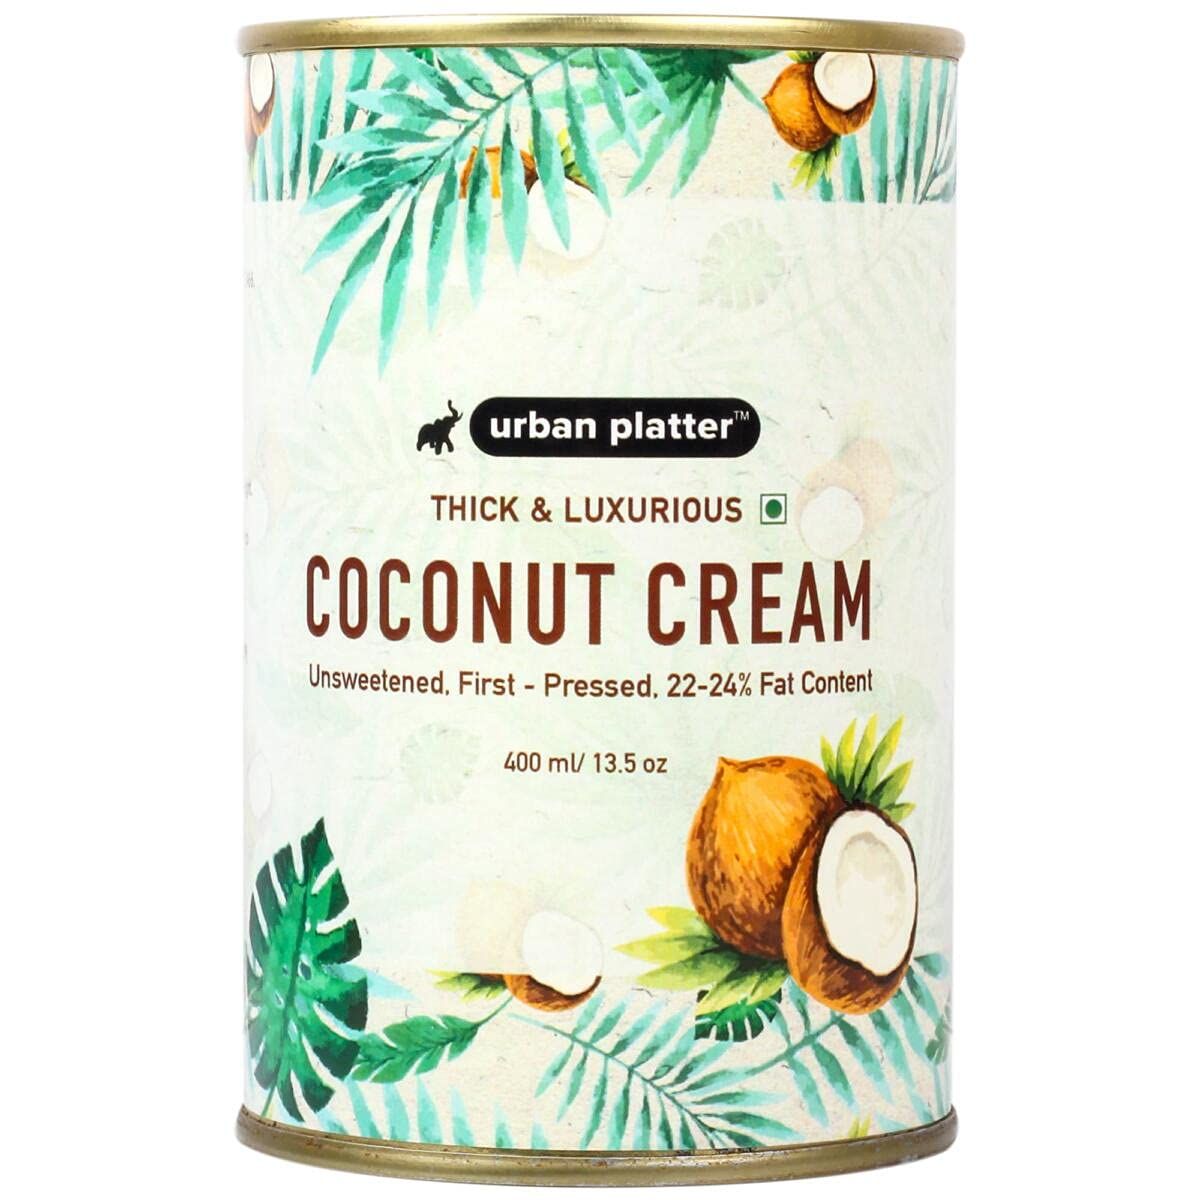 Urban Platter Thick & Luxurious Coconut Cream Image